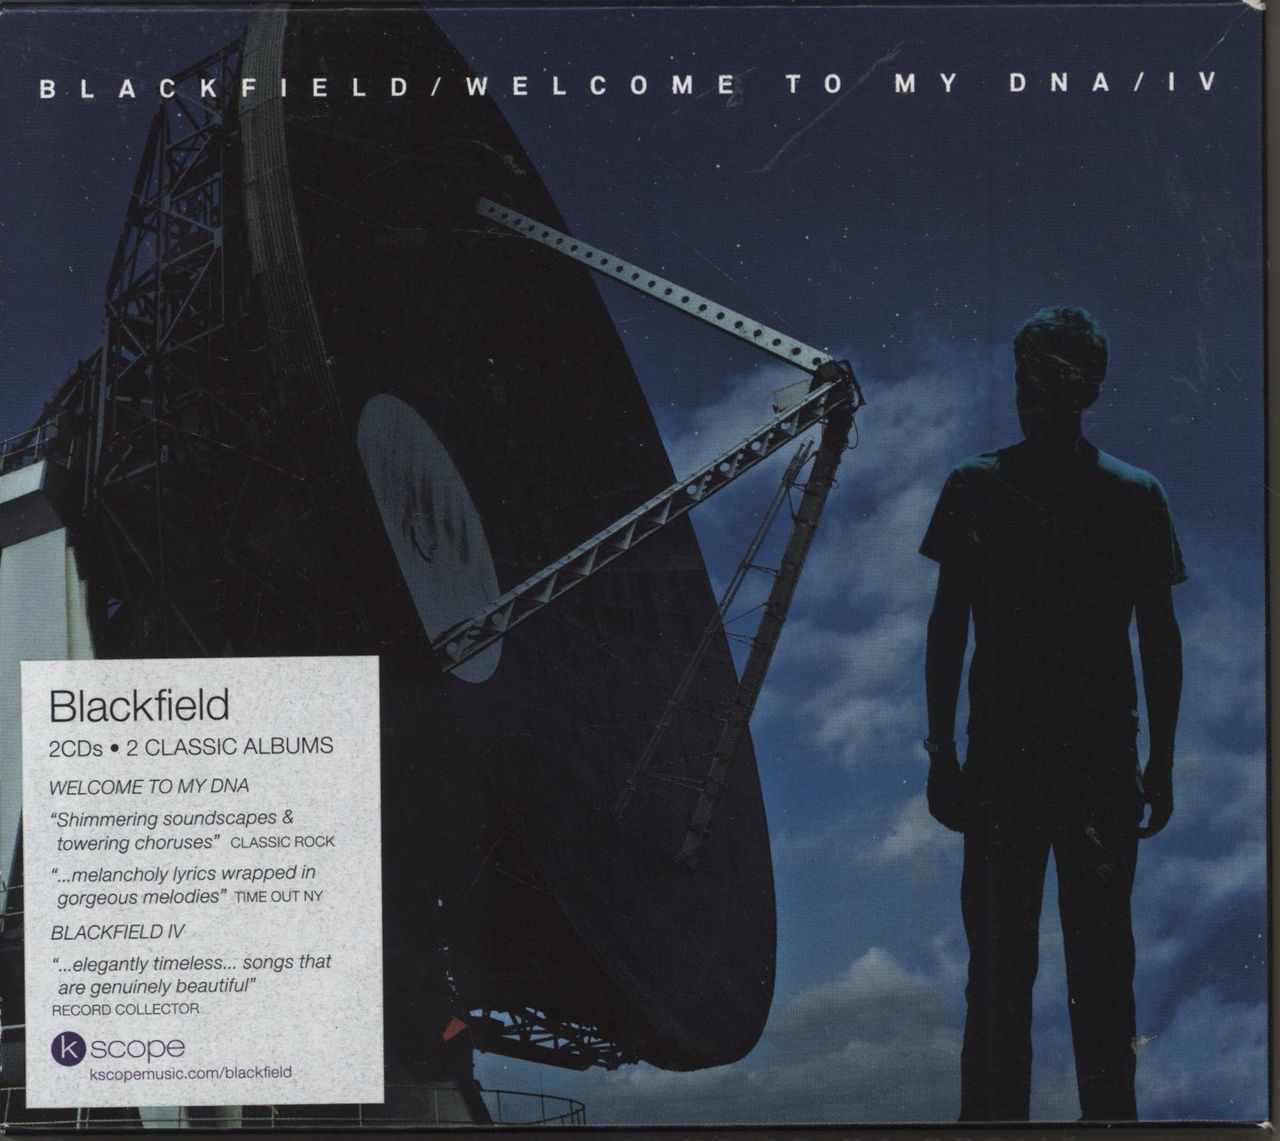 Blackfield Welcome To My DNA / IV UK 2 CD album set (Double CD) KSCOPE370